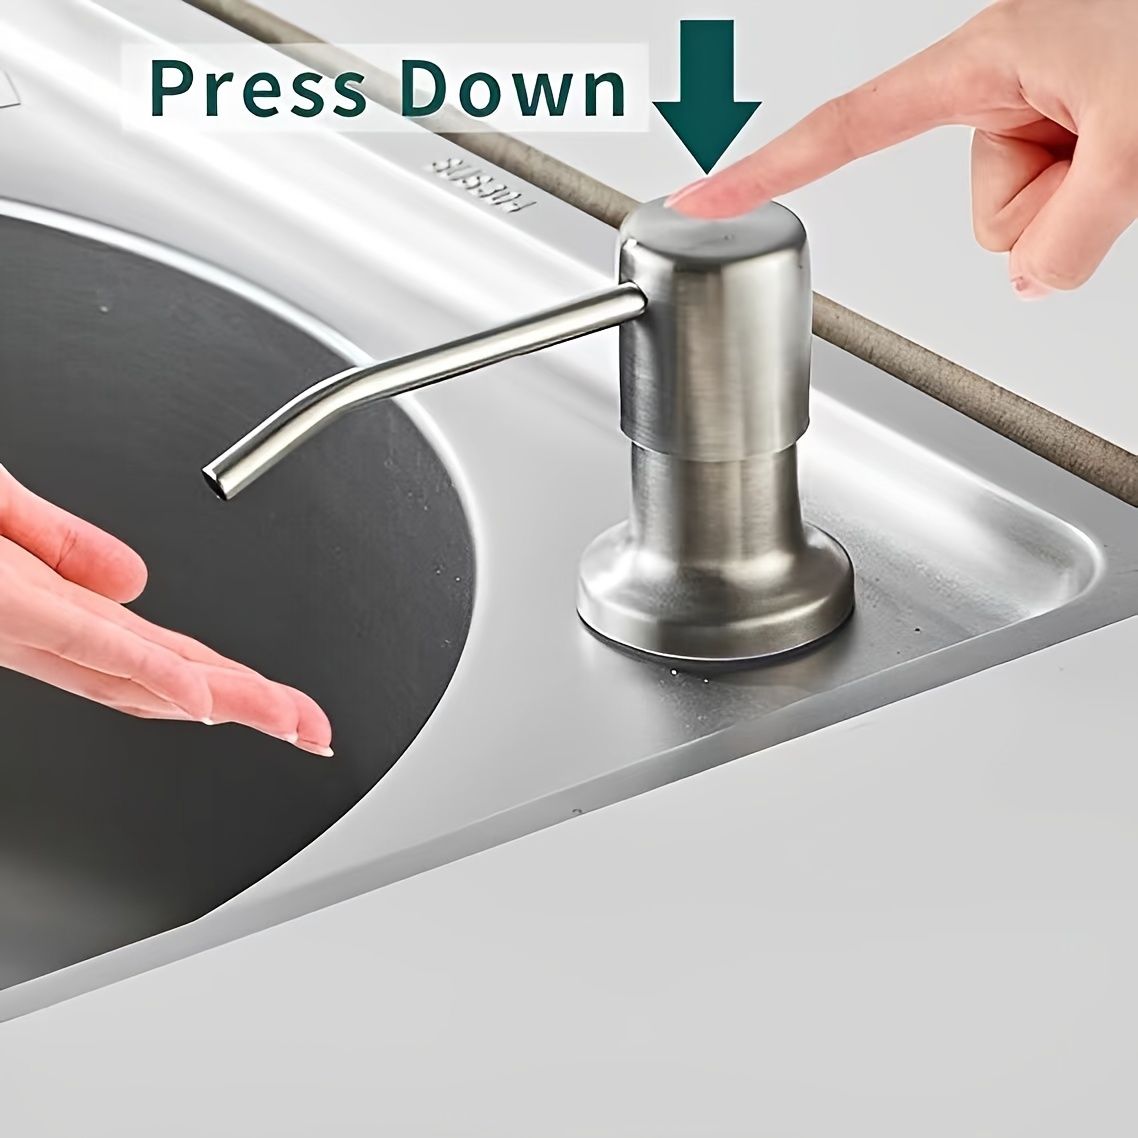 360° Sink Soap Dispenser Stainless Steel Kitchen Hands Liquid Pump Bottle  Tube